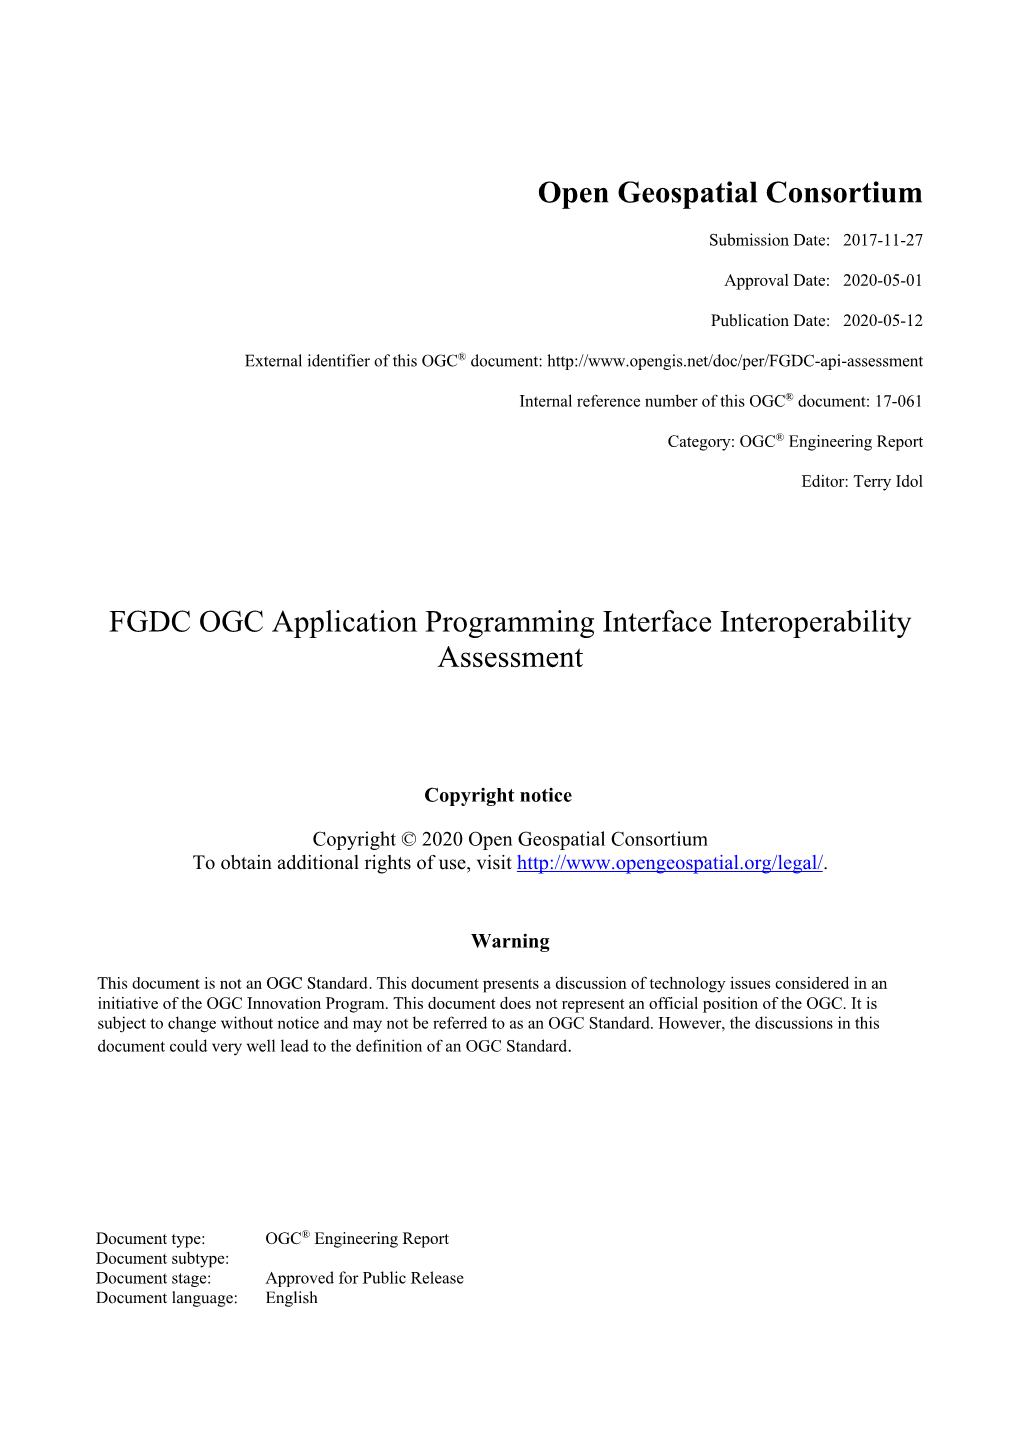 FGDC OGC Application Programming Interface Interoperability Assessment